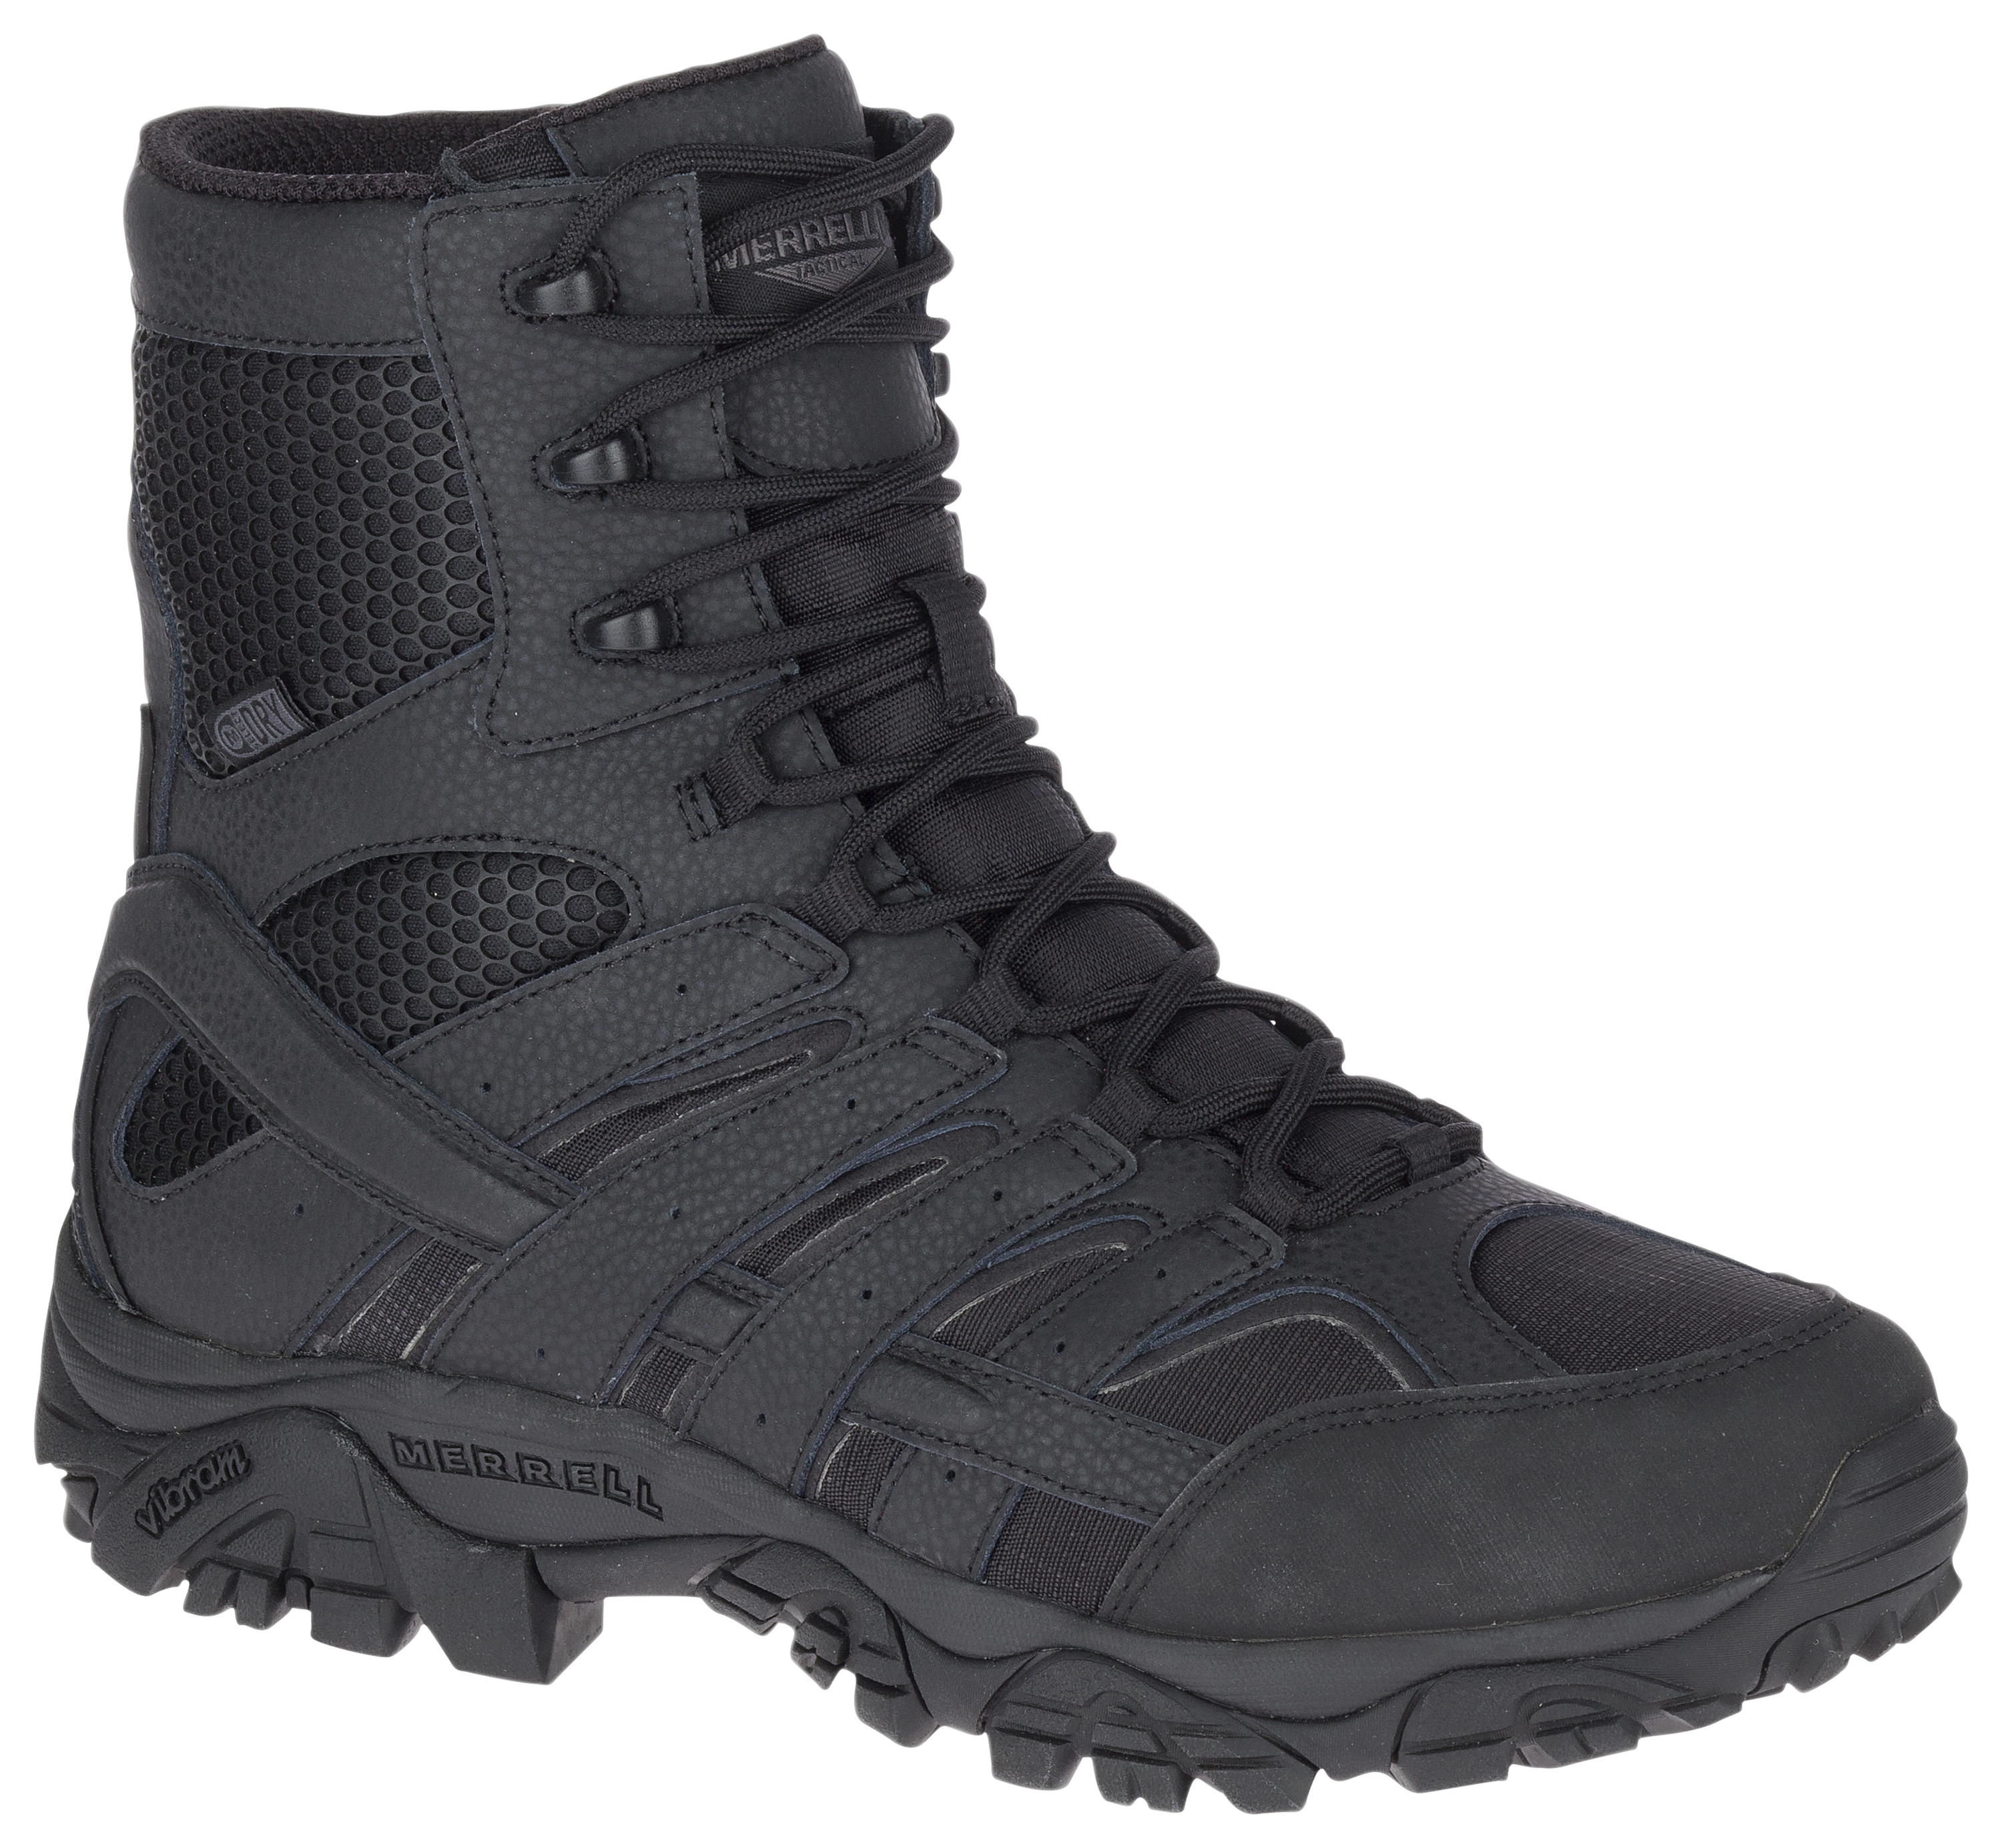 Merrell Moab 2 Waterproof Tactical Boots for Men - Black - 9 5M